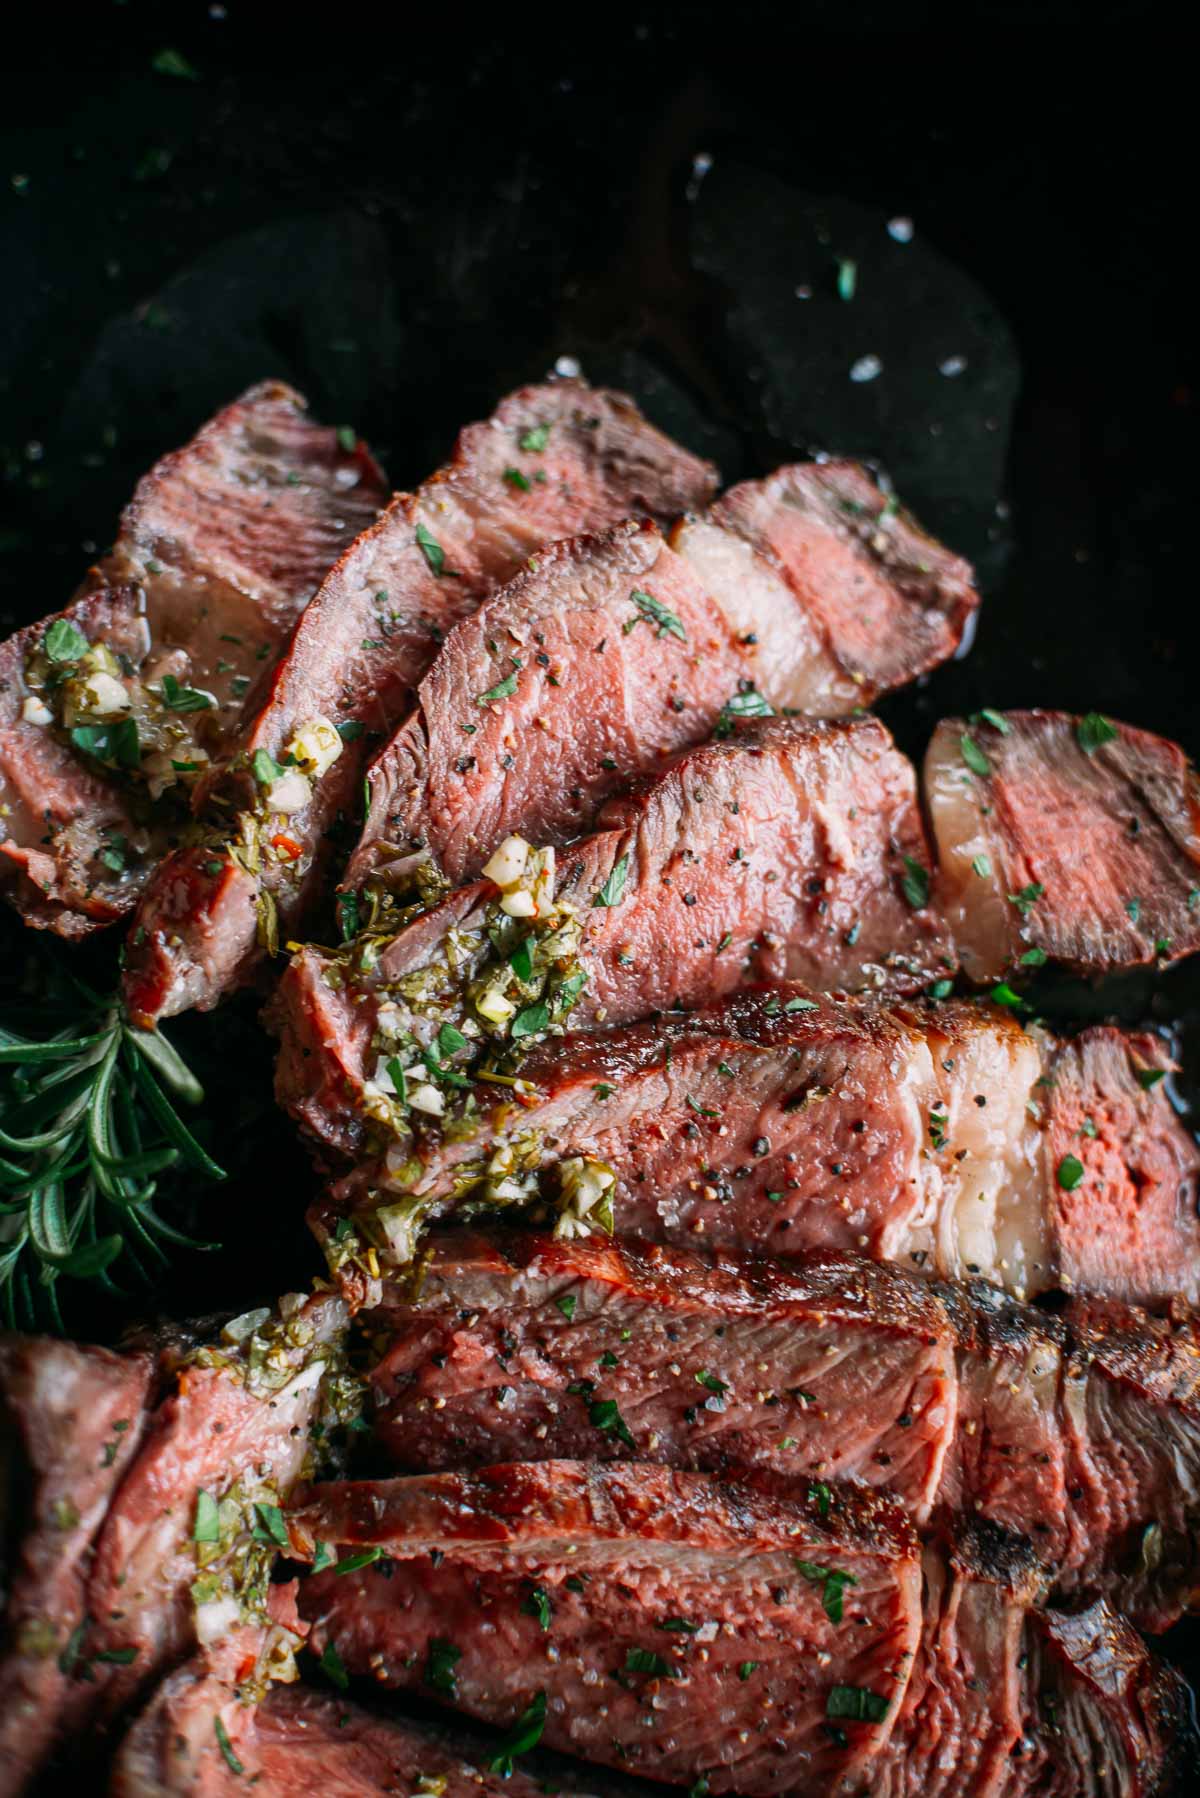 Close-up of sliced, medium-rare smoked ribeye steak garnished with herbs and garlic, displayed on a dark surface.